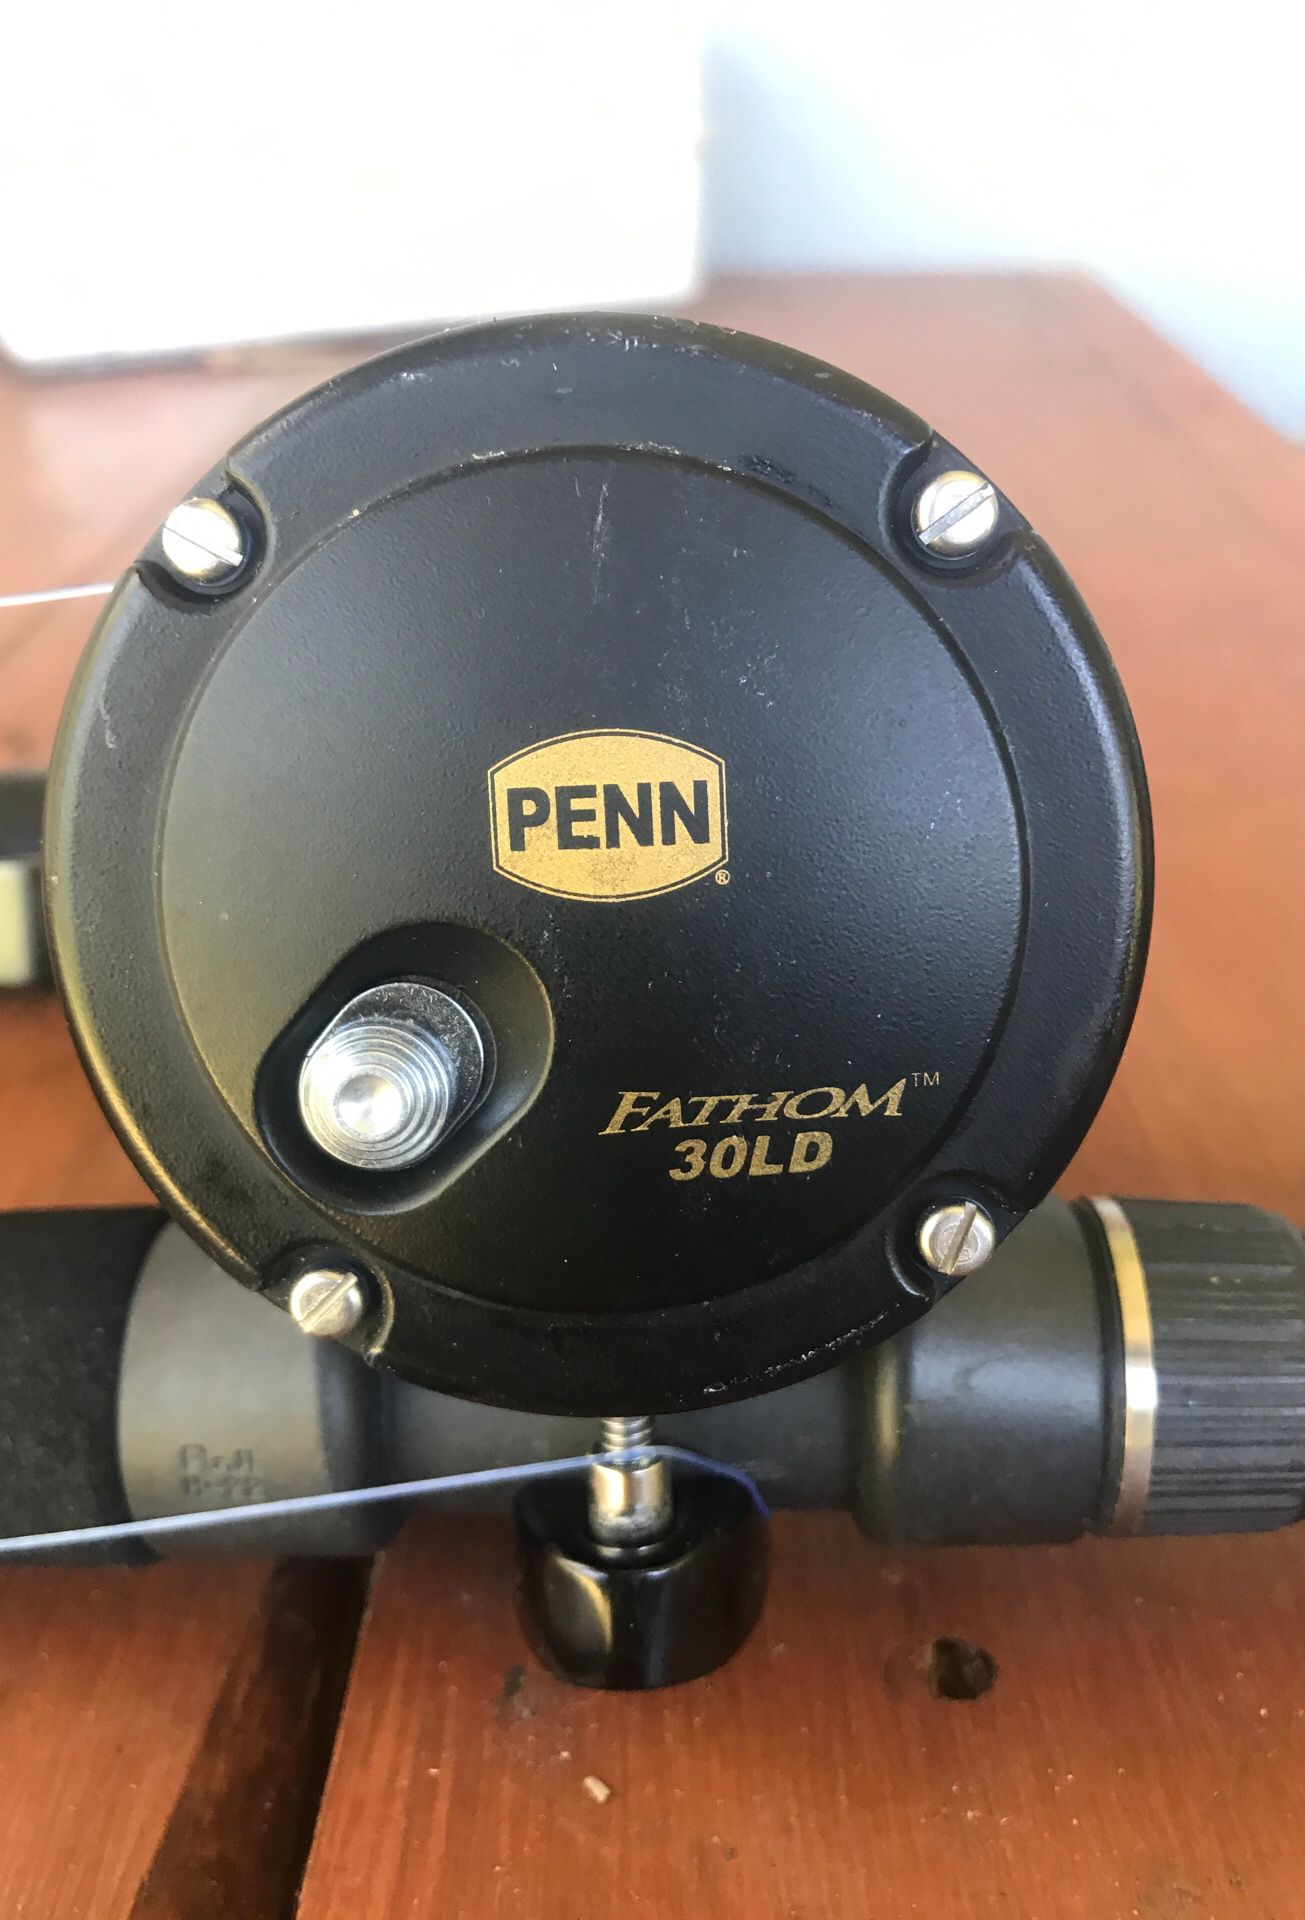 Penn 30 LD Fishing reel and St croix premier rod